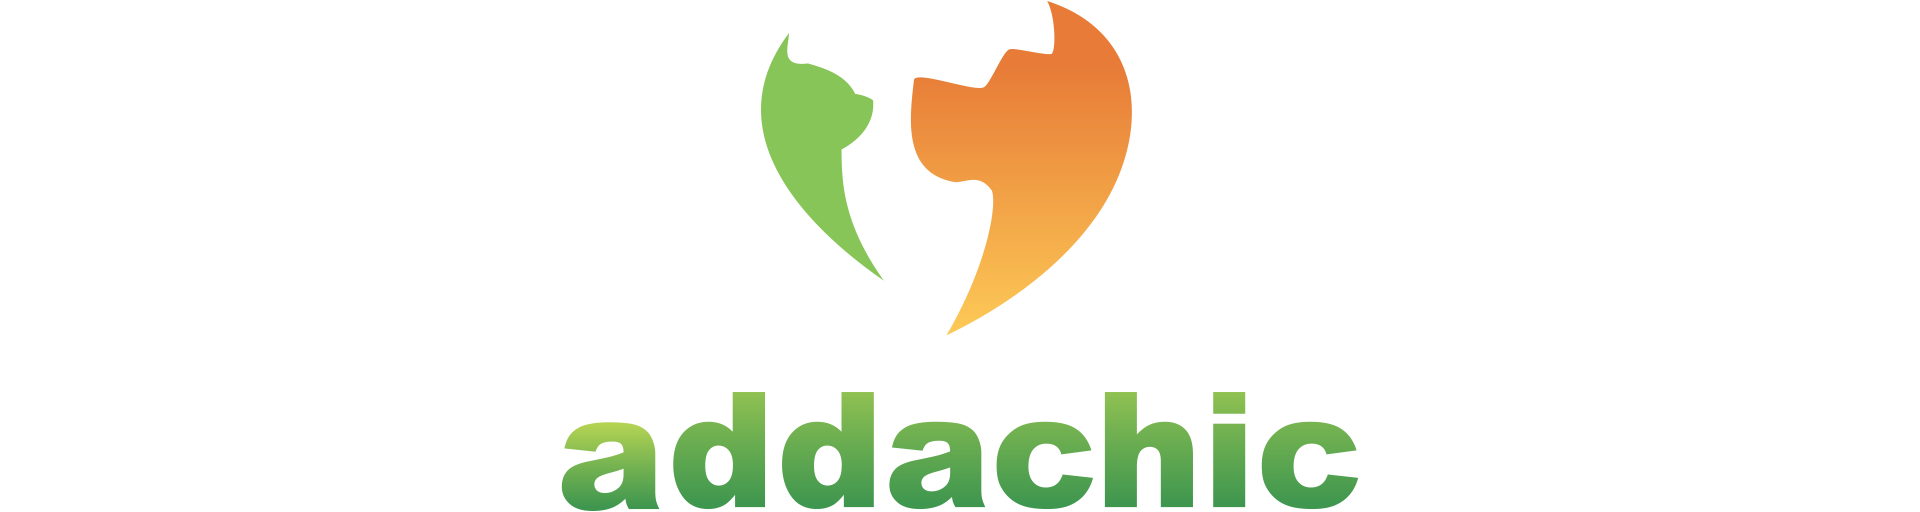 Addachic